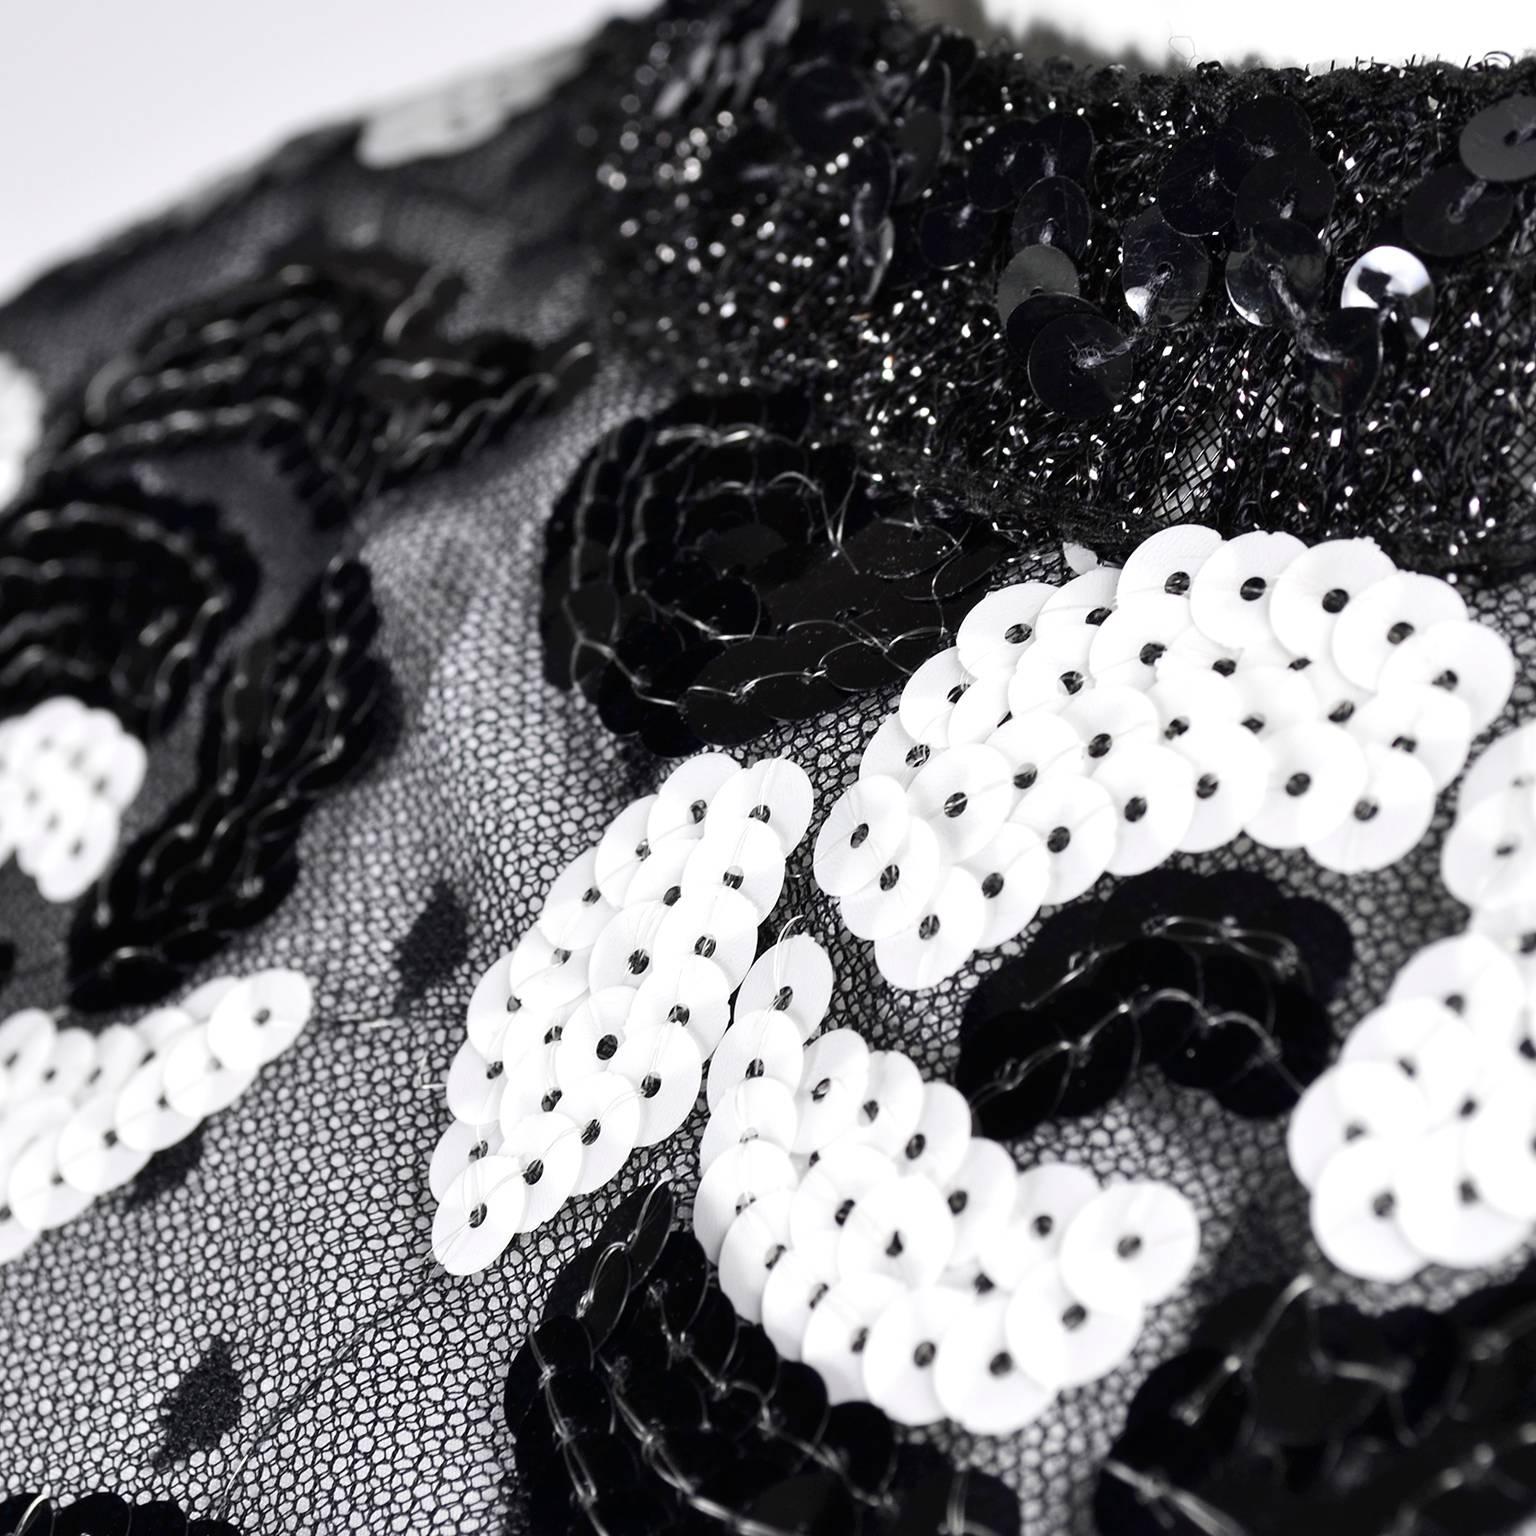 Victor Costa Vintage Dress in Black Mesh Black & White Sequins Over White Satin 2